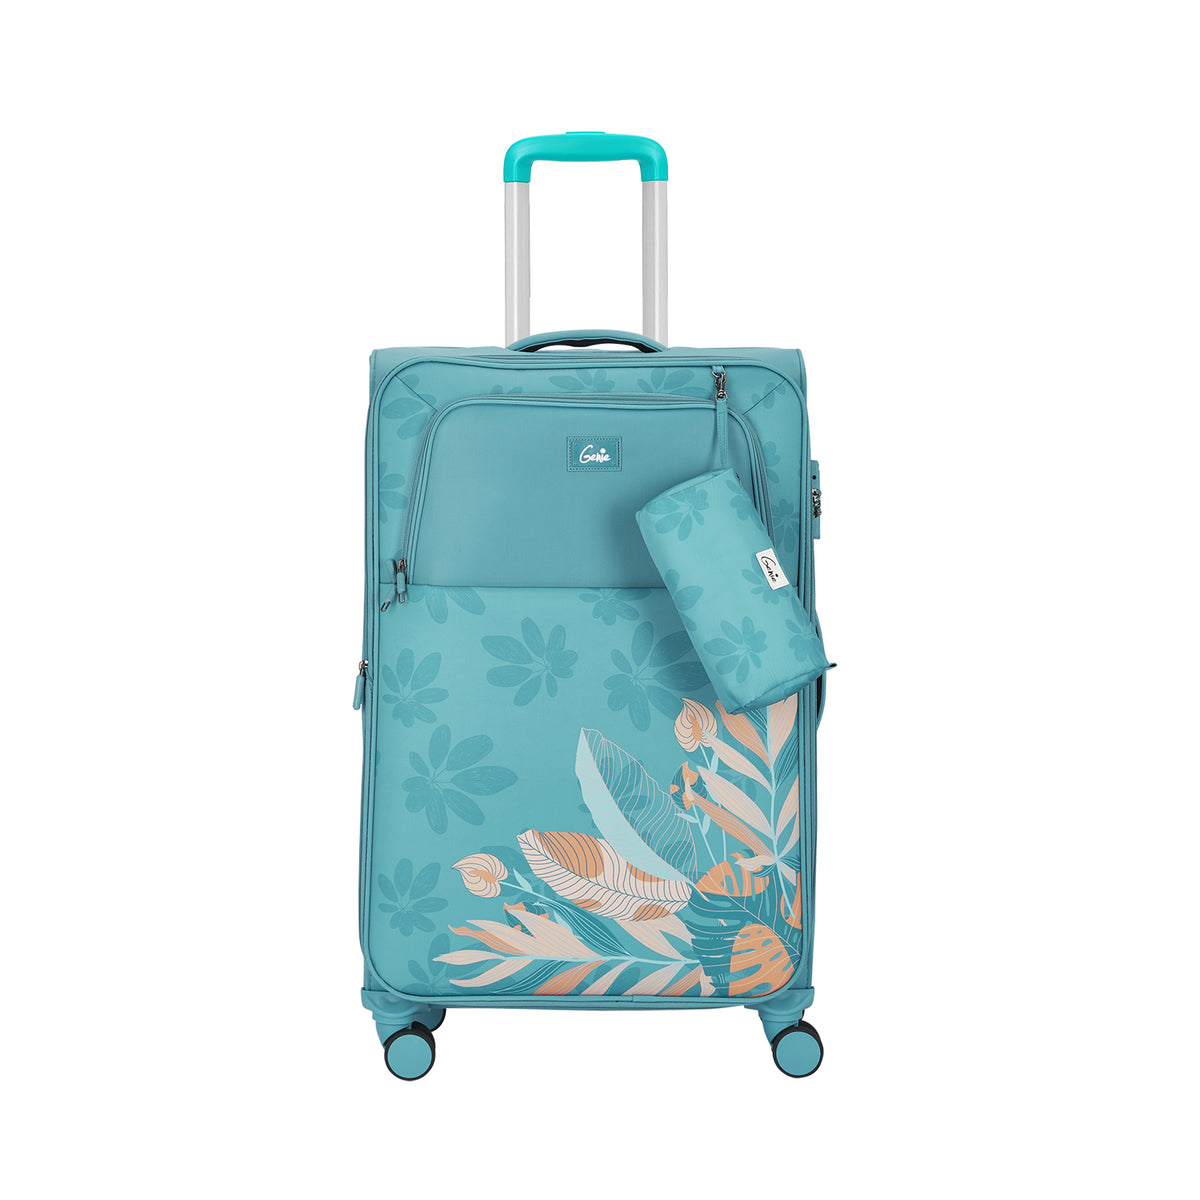 Bloom Soft Luggage- Teal